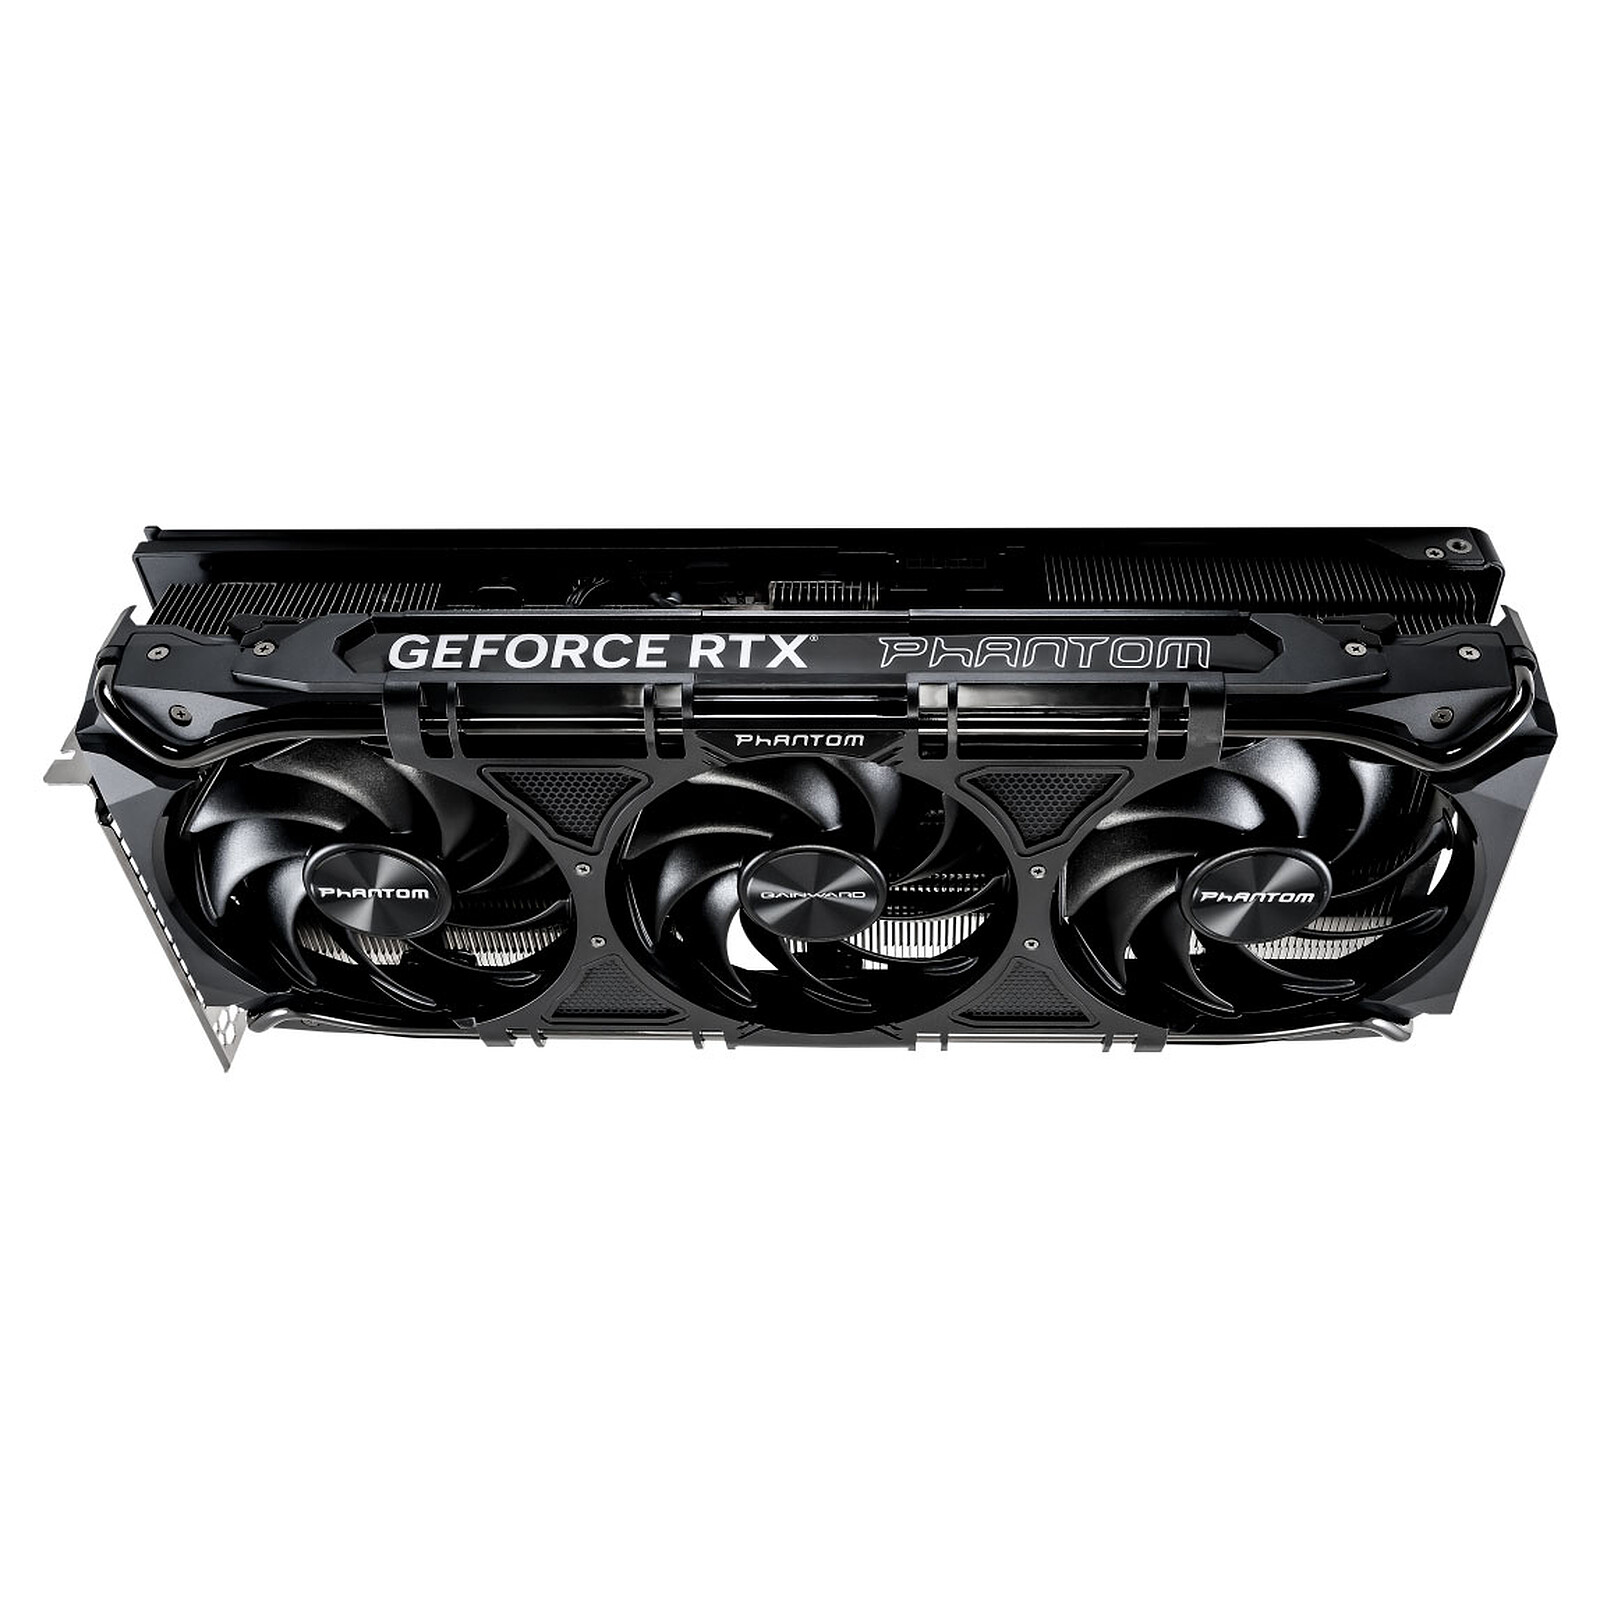 GeForce RTX 4090 Phantom GS